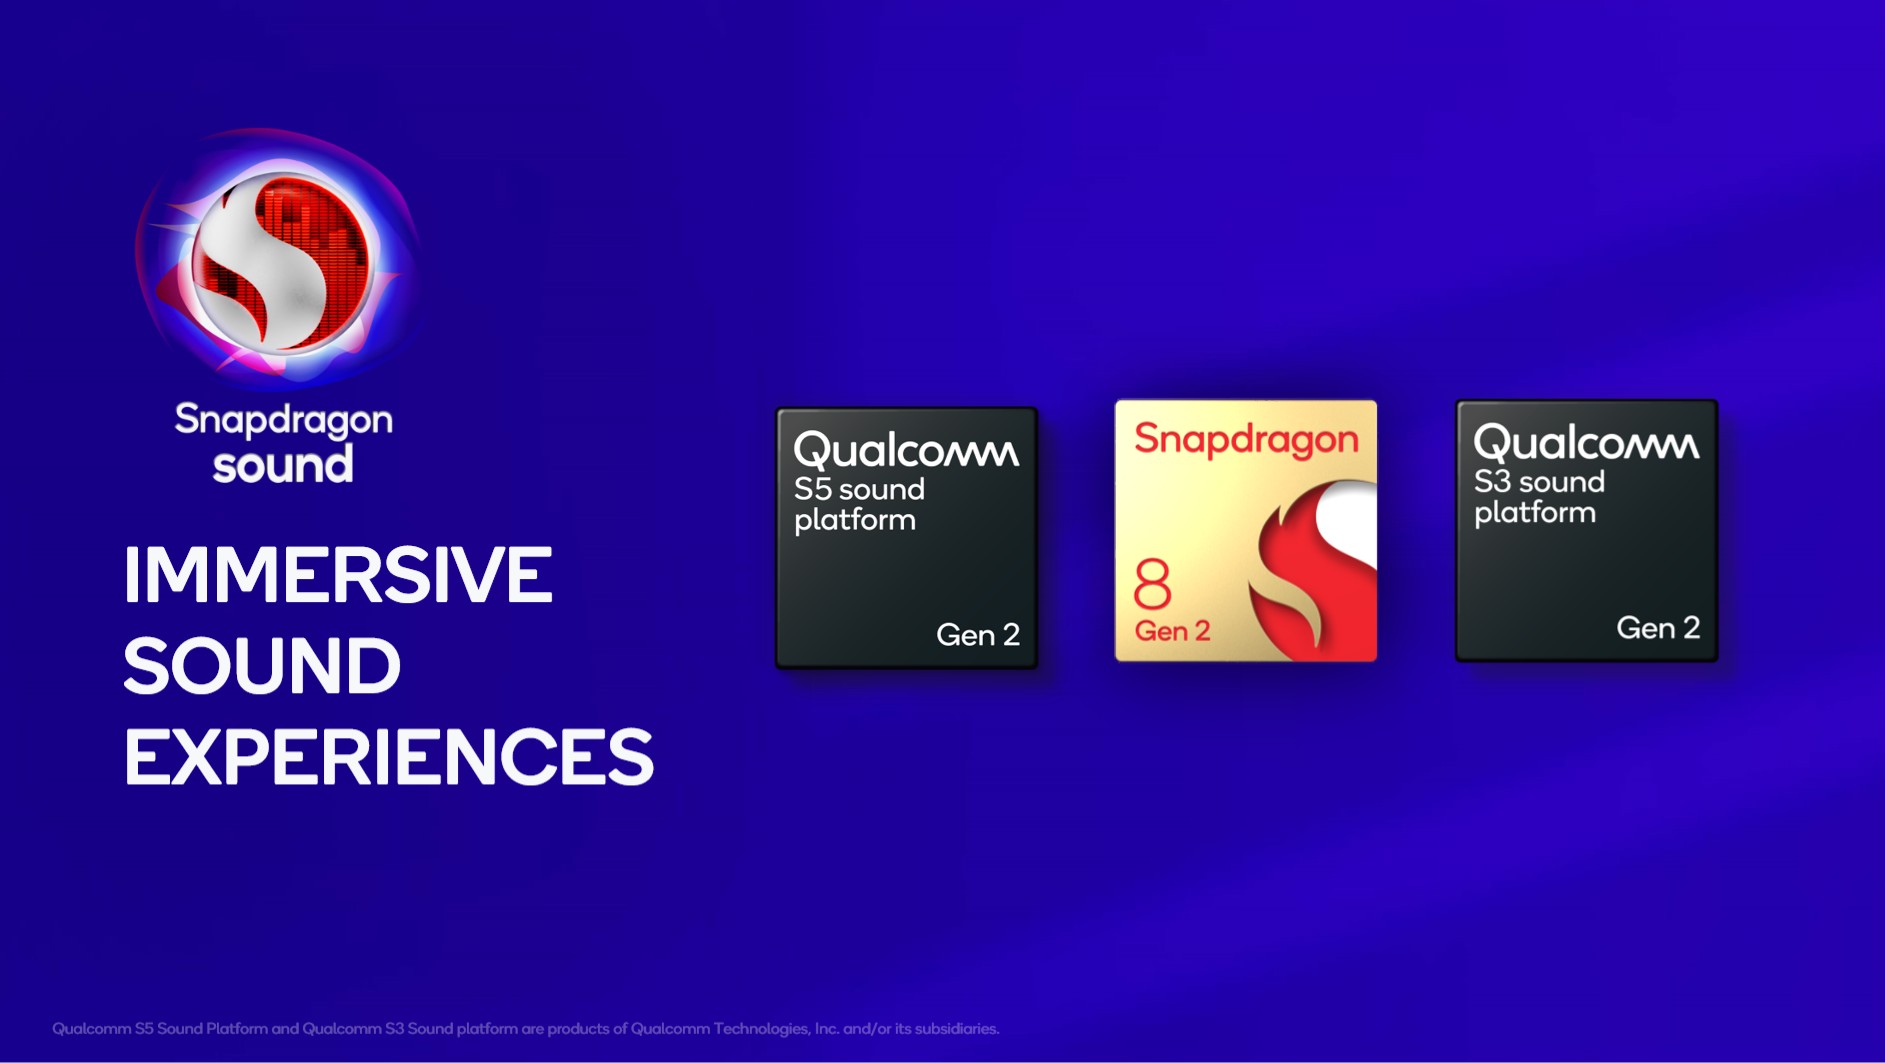 Qualcomm announces S5 and S3 Gen 2 platforms for audio devices
